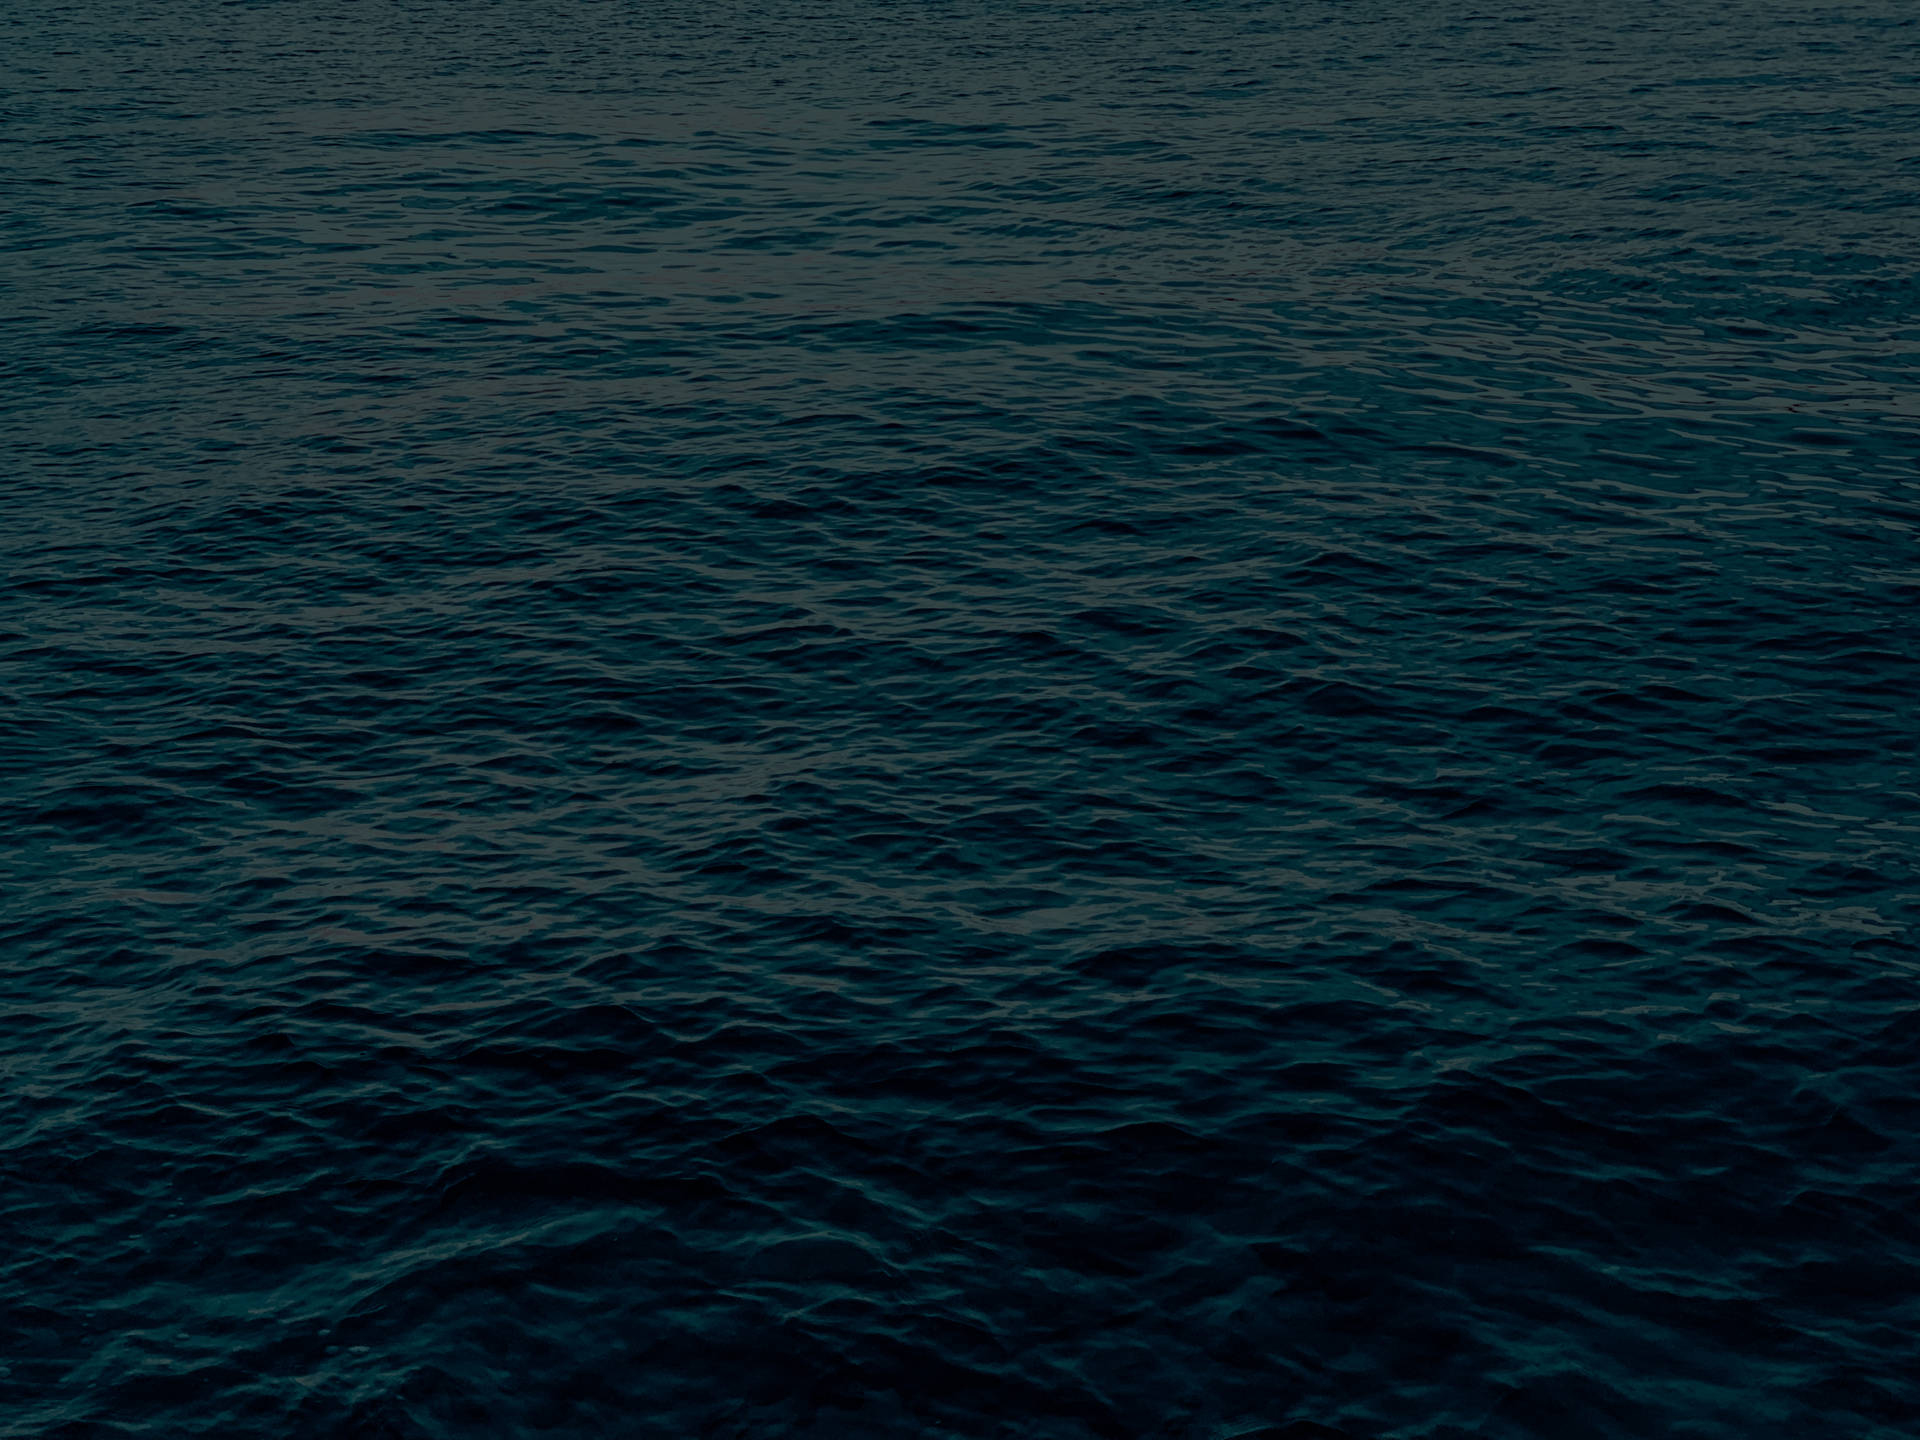 Solid Dark Blue Sea Surface